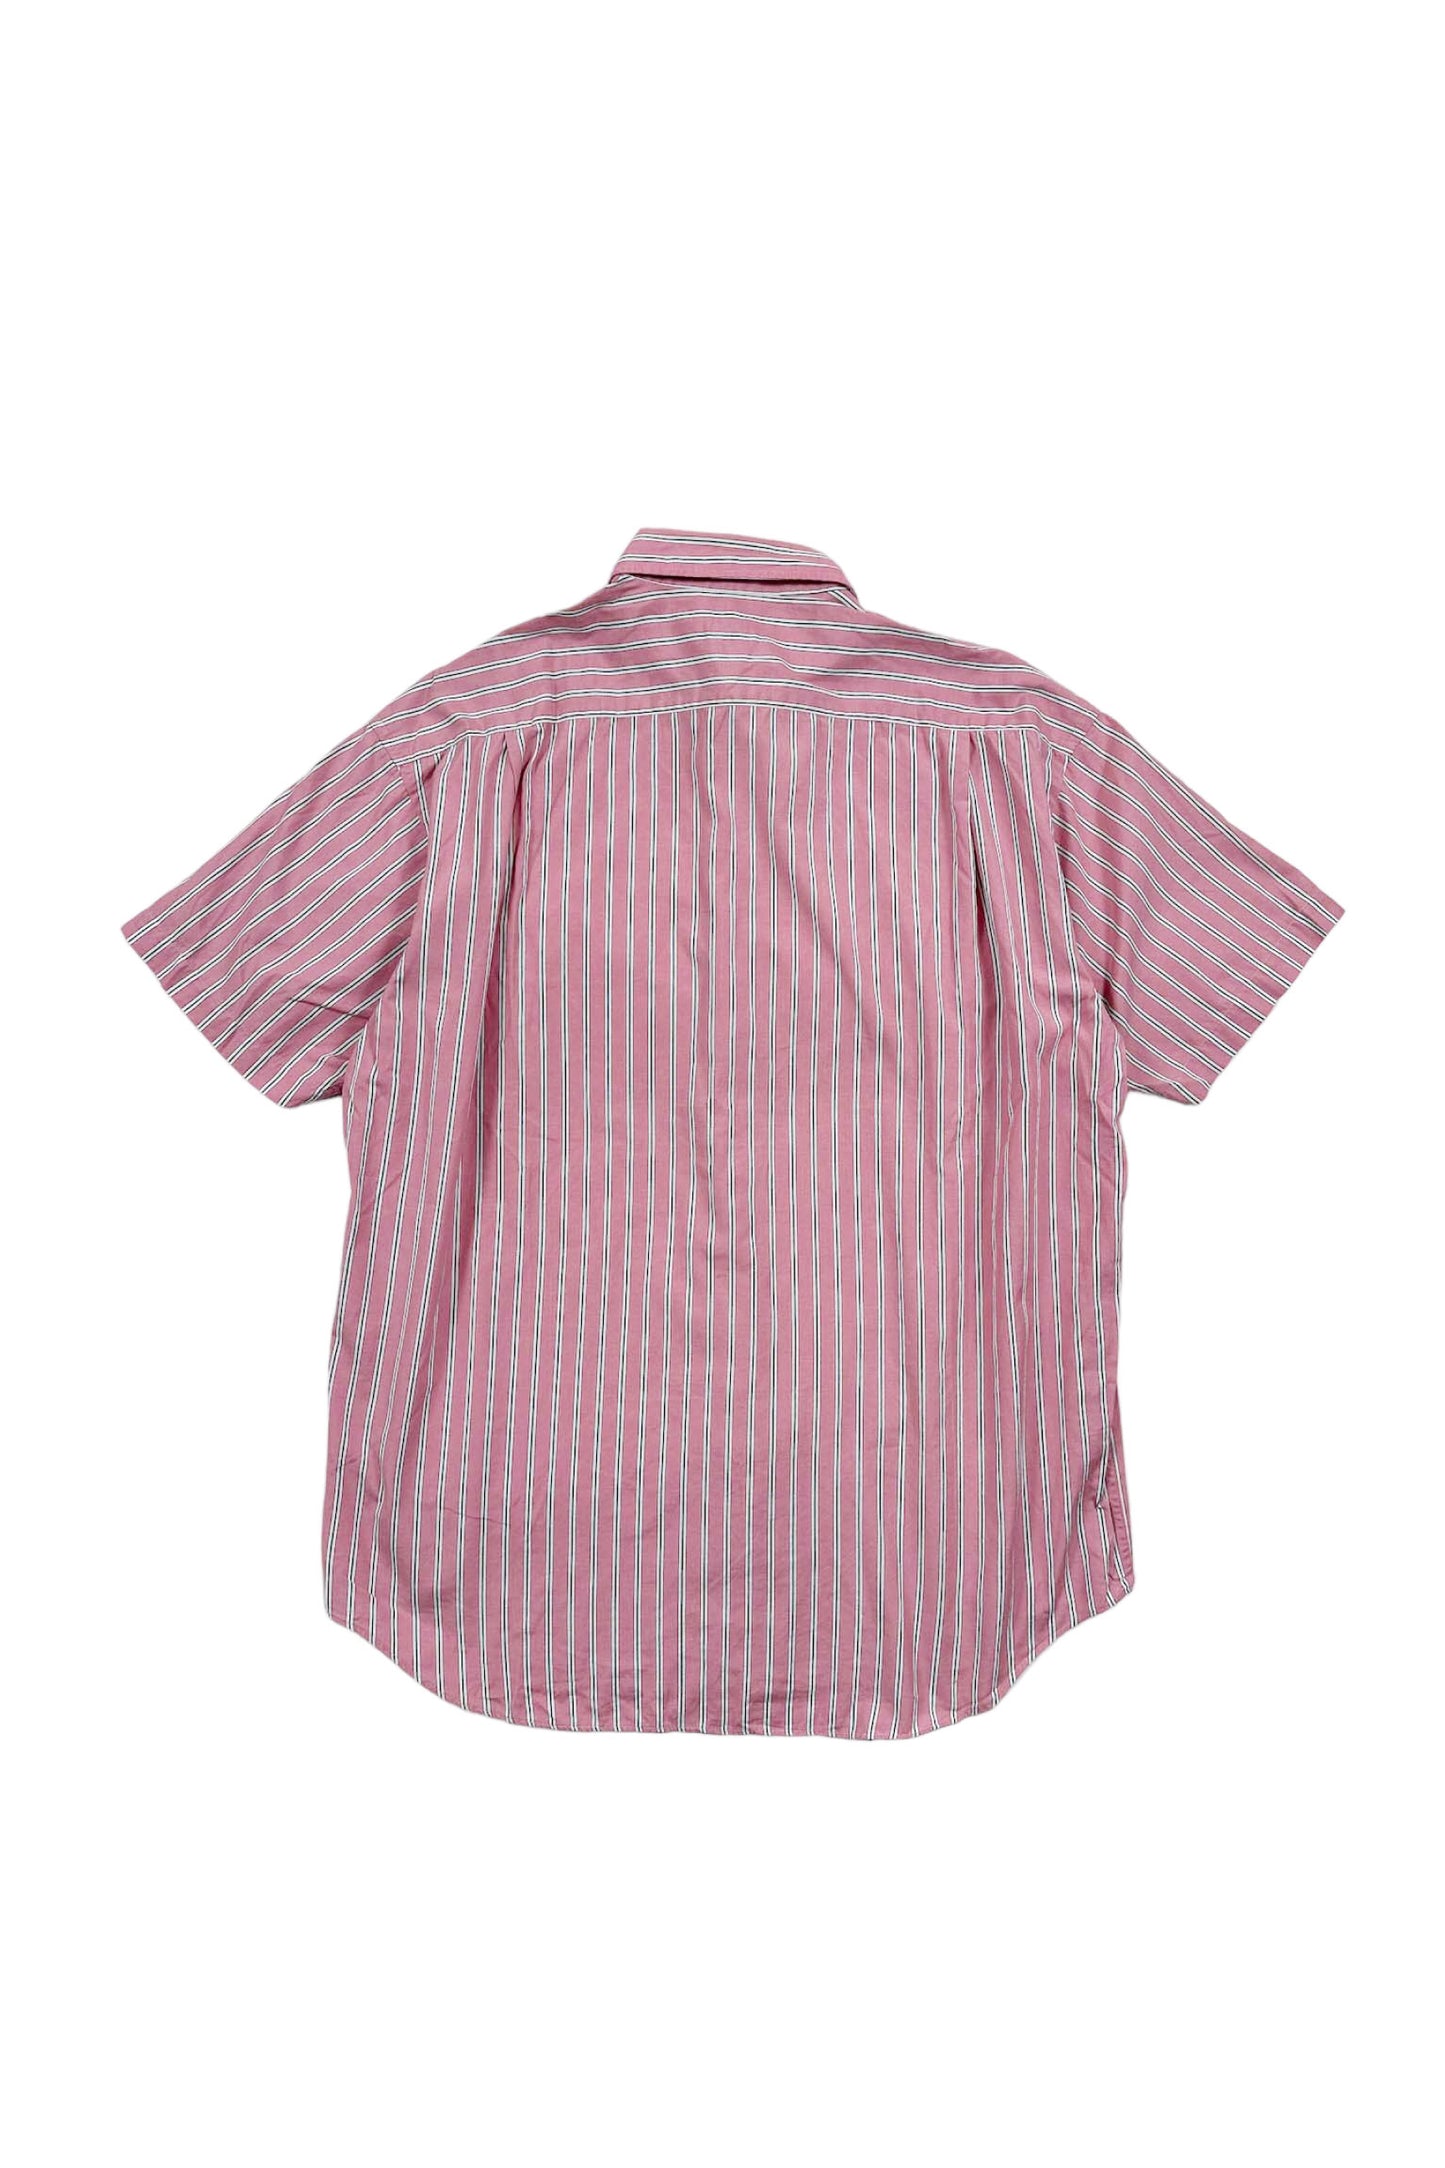 90's JUN stripe shirt